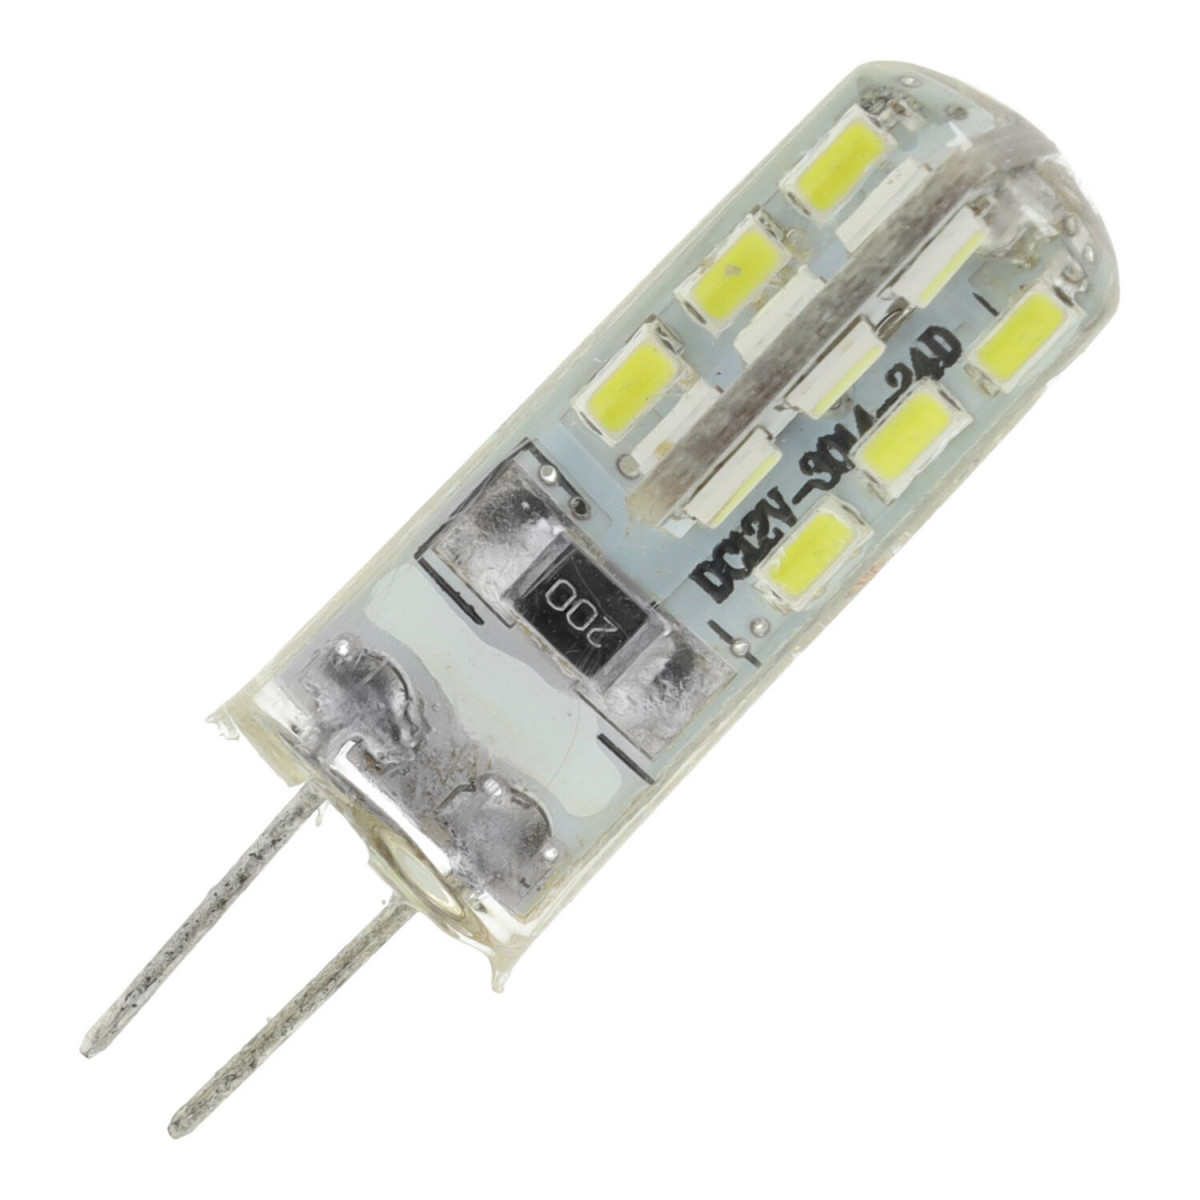 G4 1.5W lampadina bi-pin 50 lumen luce bianca calda